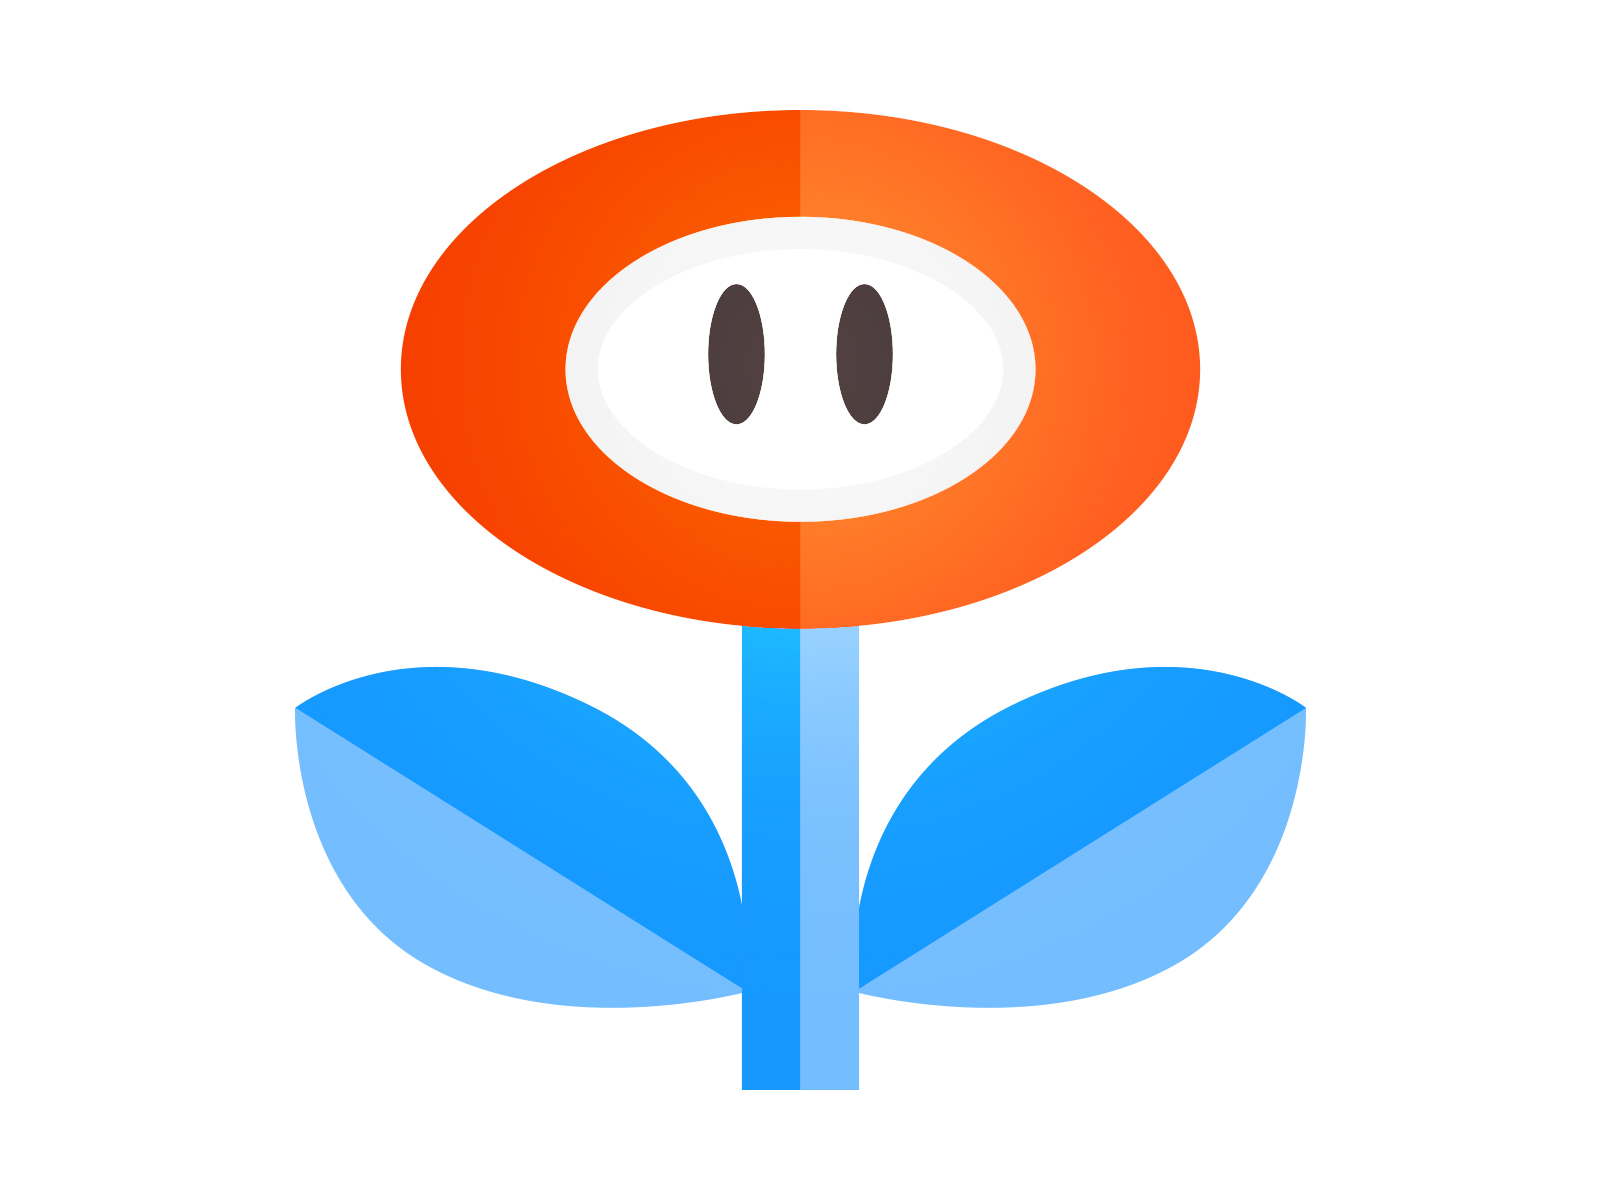 Sunny Fireflower NES Icon Design Inspiration